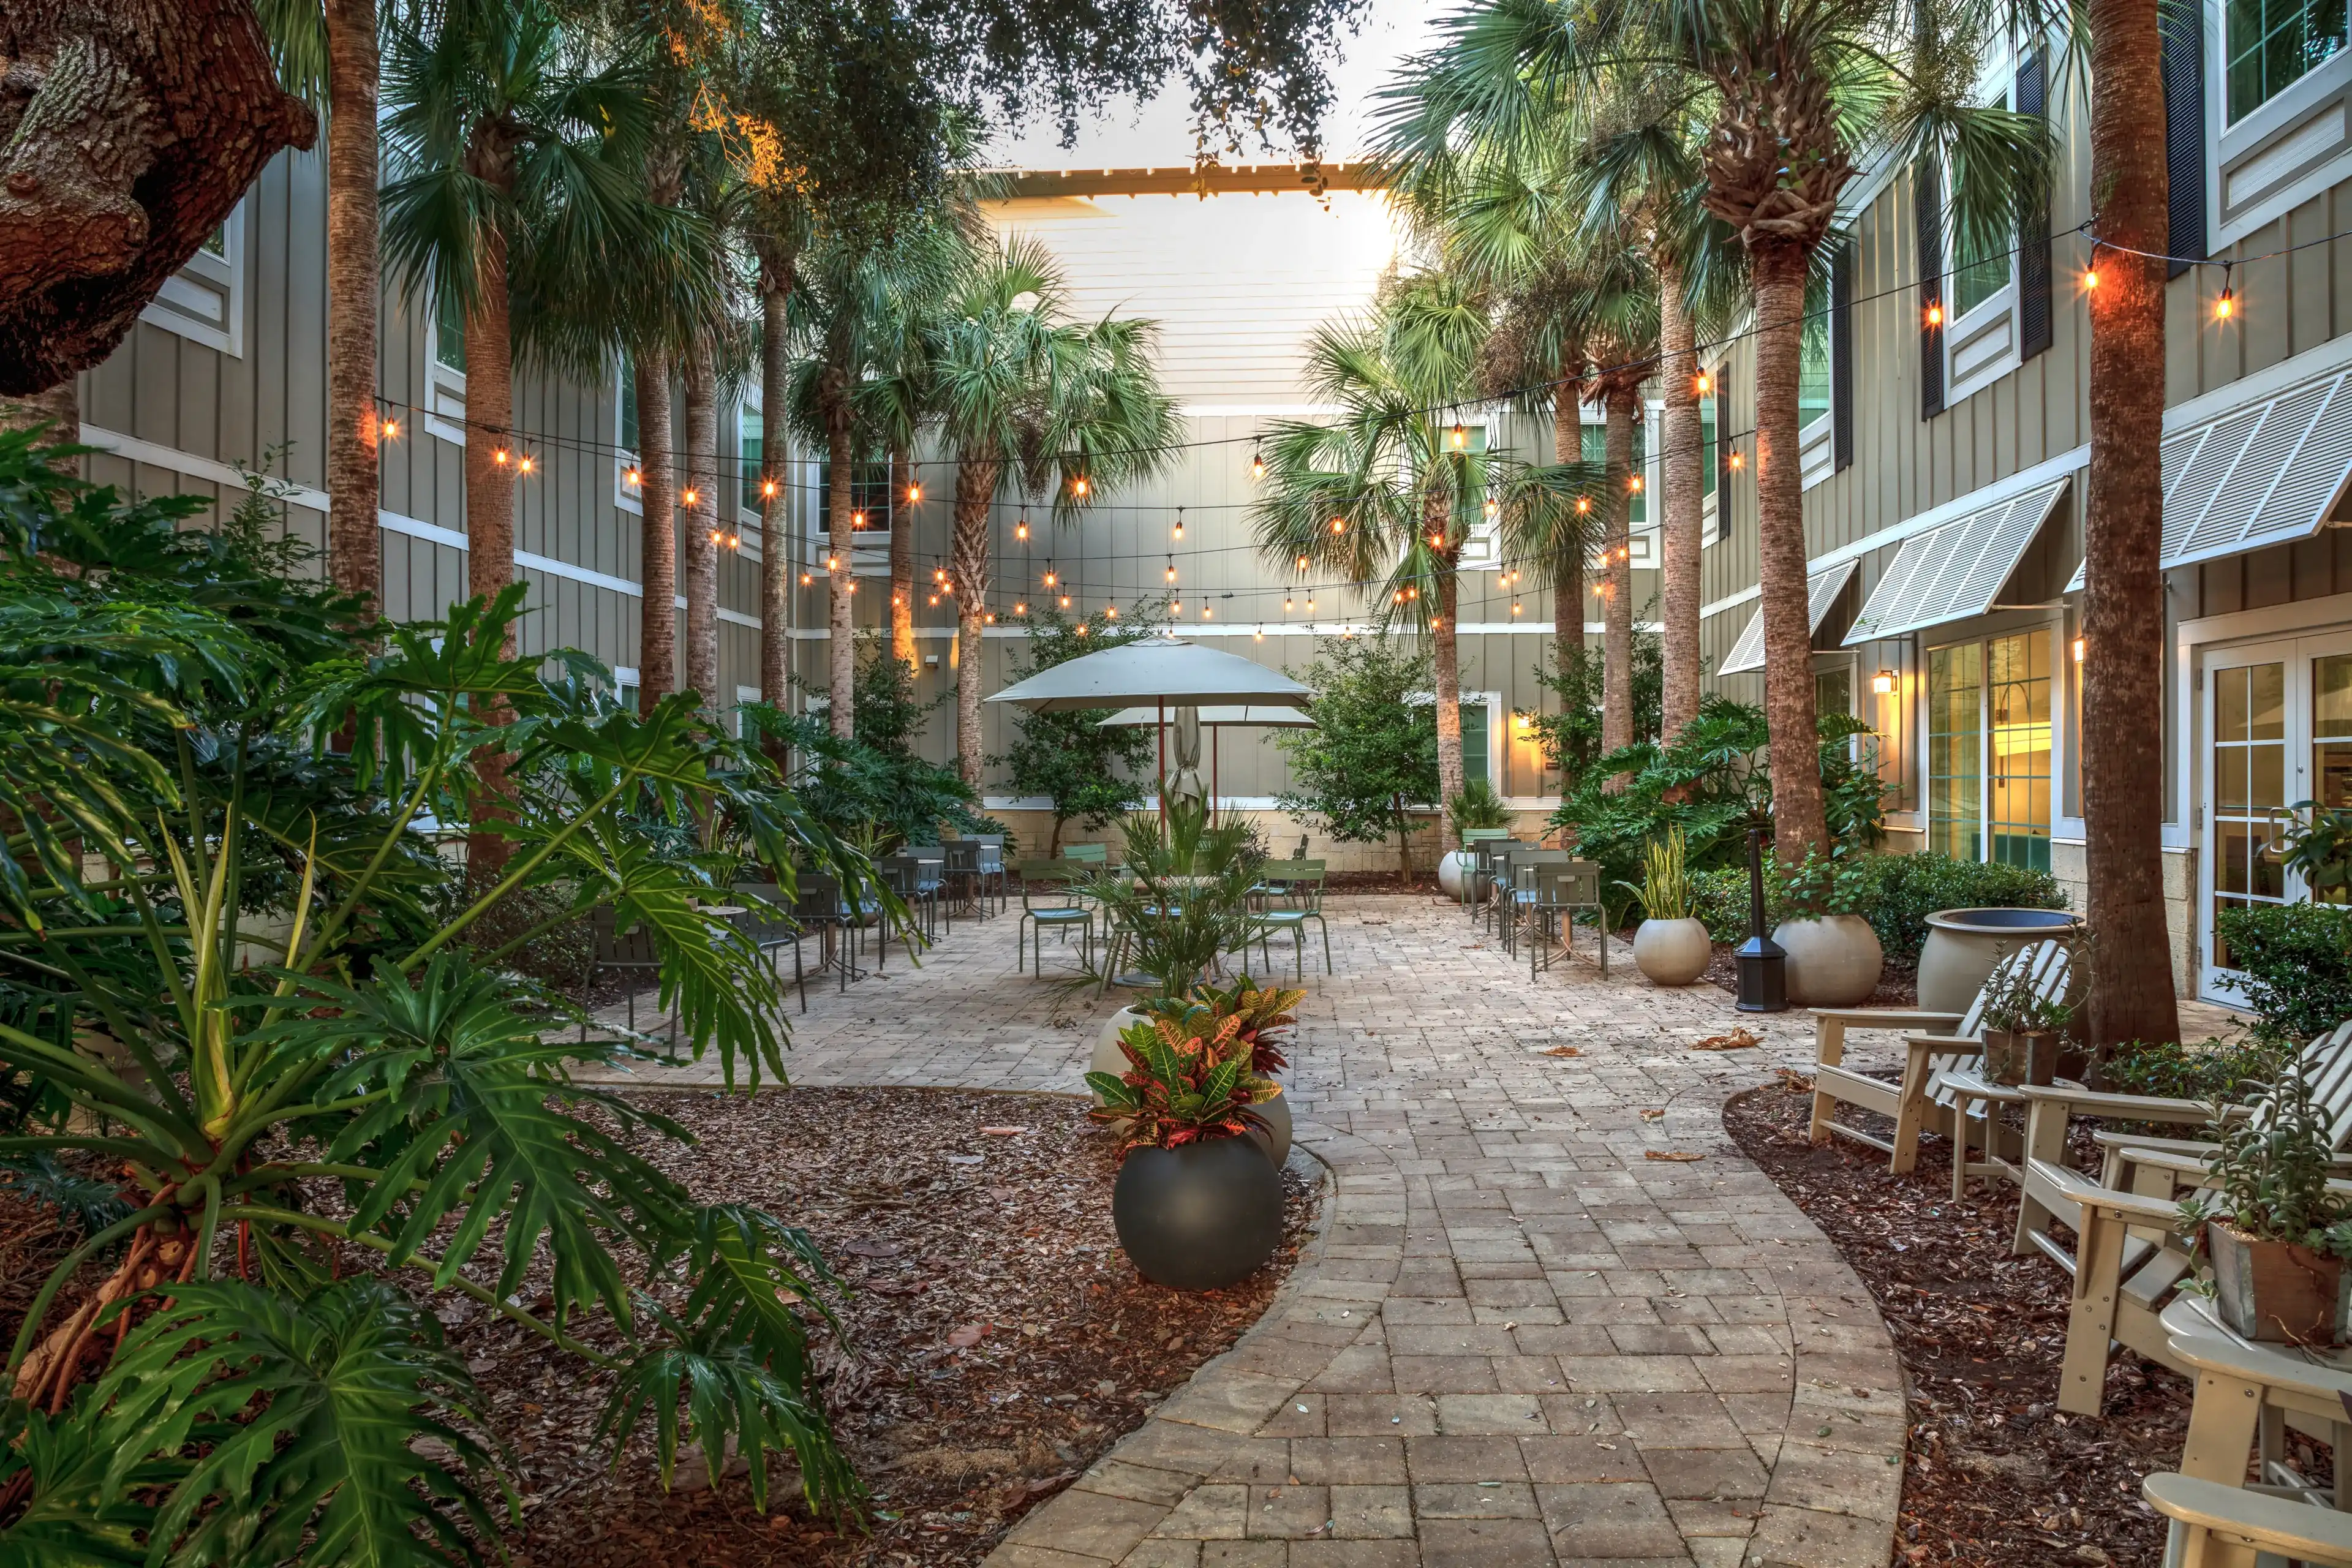 Best New Smyrna Beach hotels. Cheap hotels in New Smyrna Beach, Florida, United States